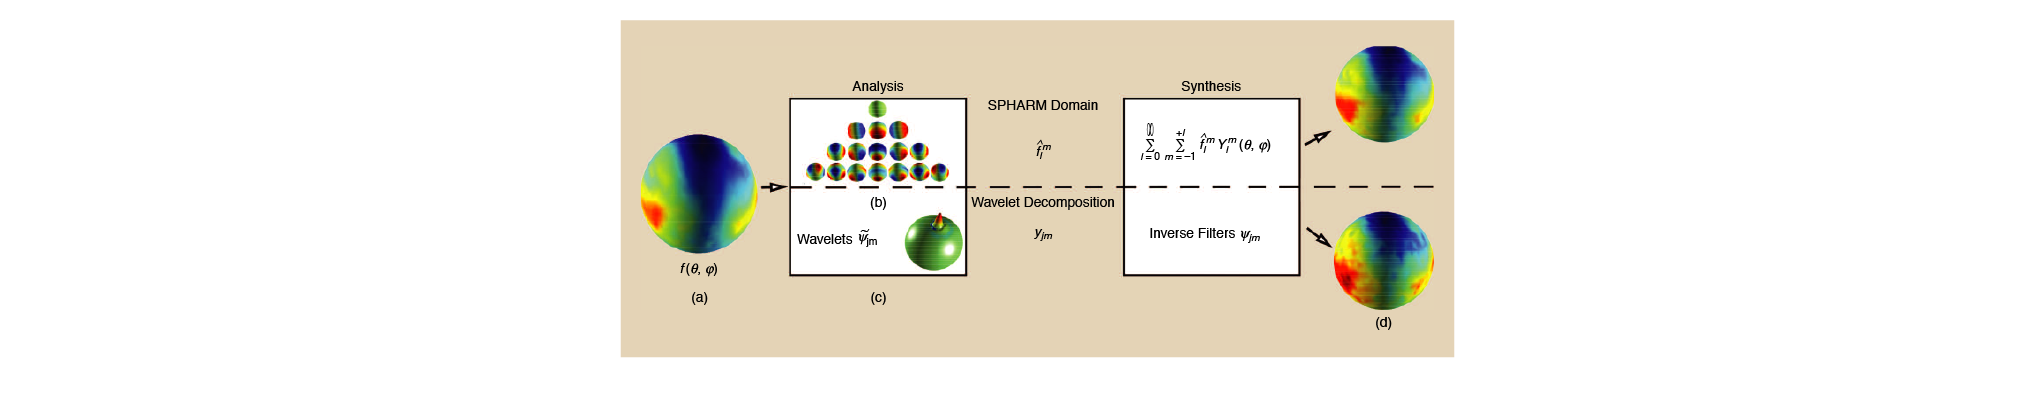 Spherical Analysis materials